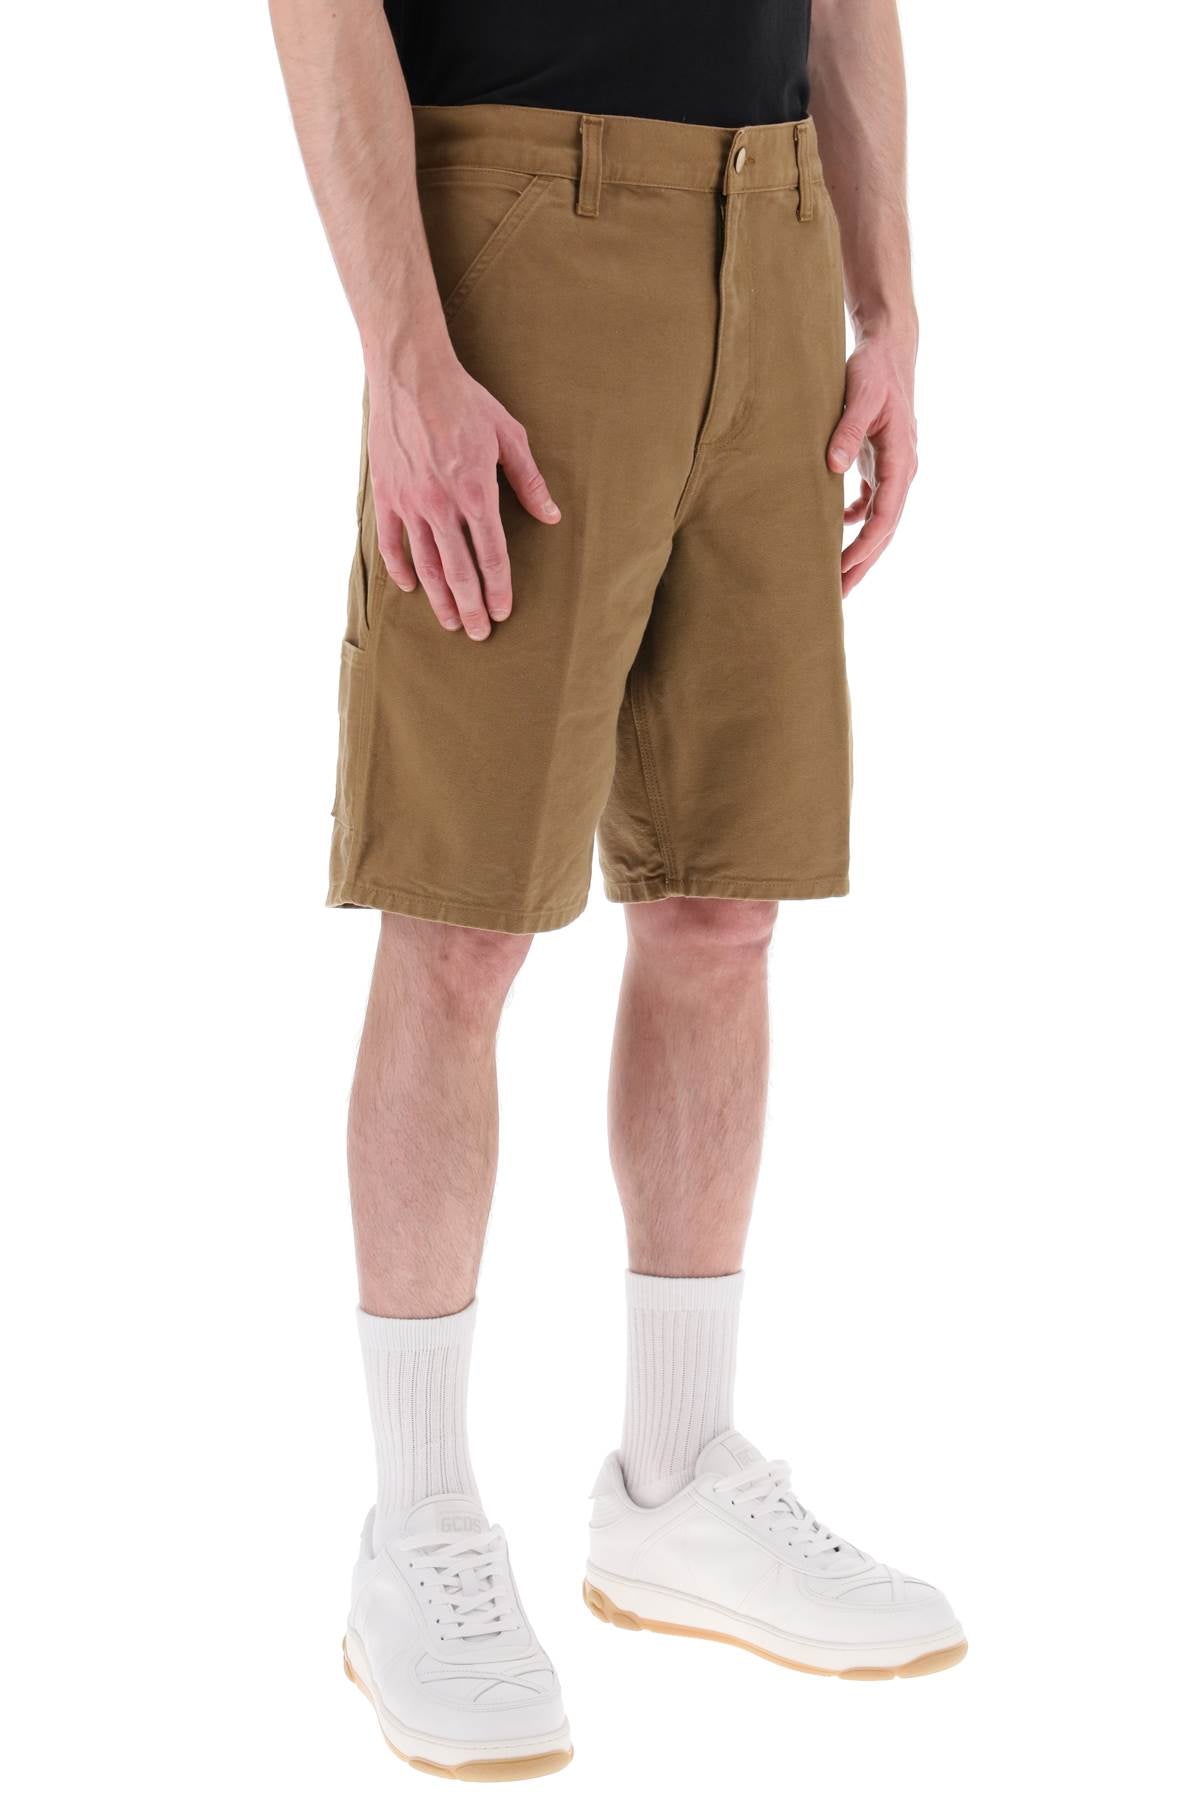 Carhartt wip organic cotton shorts-1